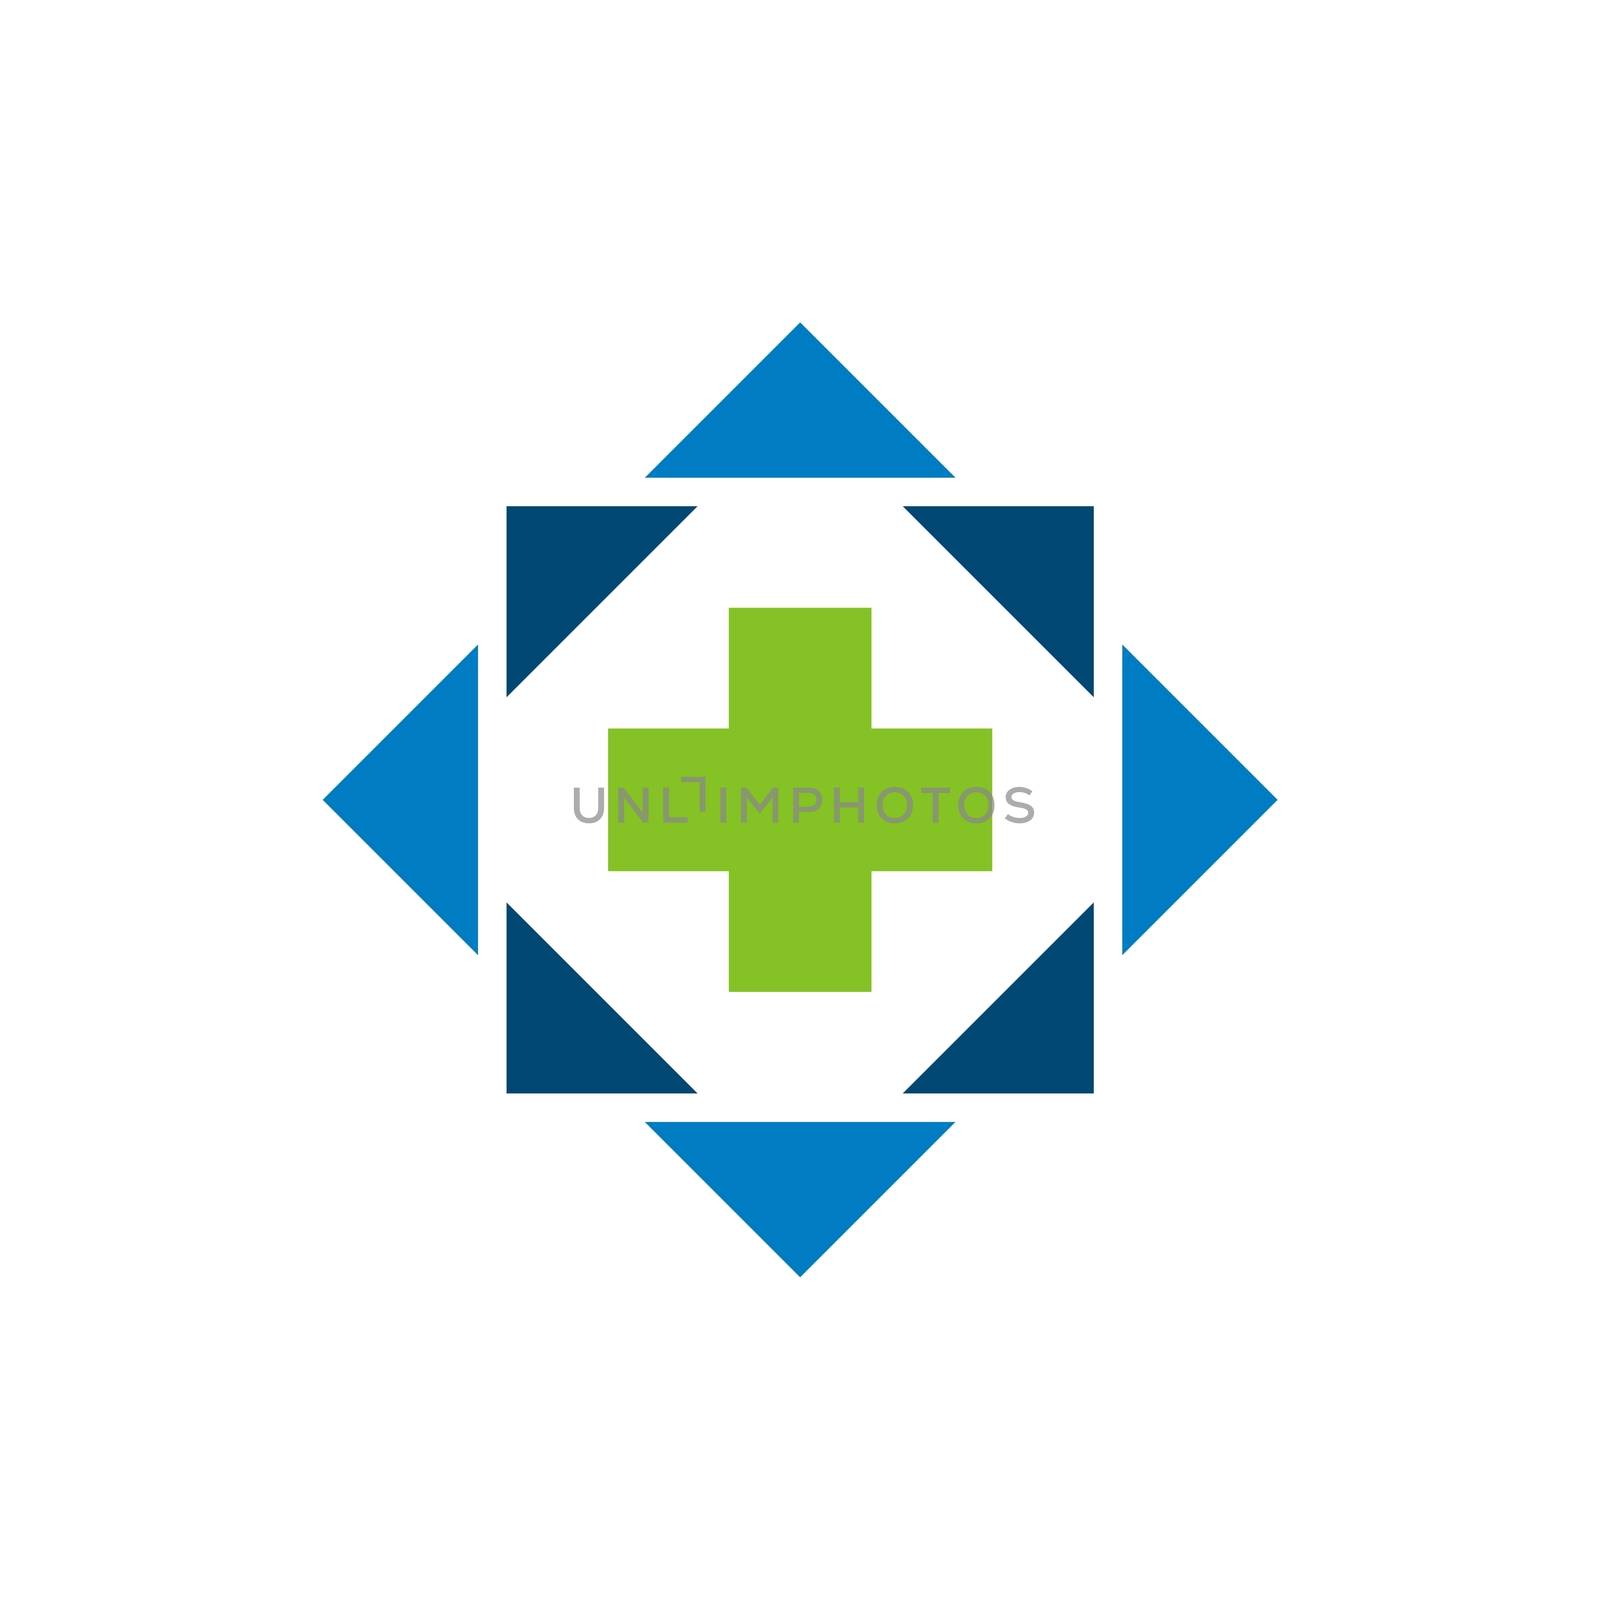 Health Care Cross and Diamond Shape Logo Template Illustration Design. Vector EPS 10.